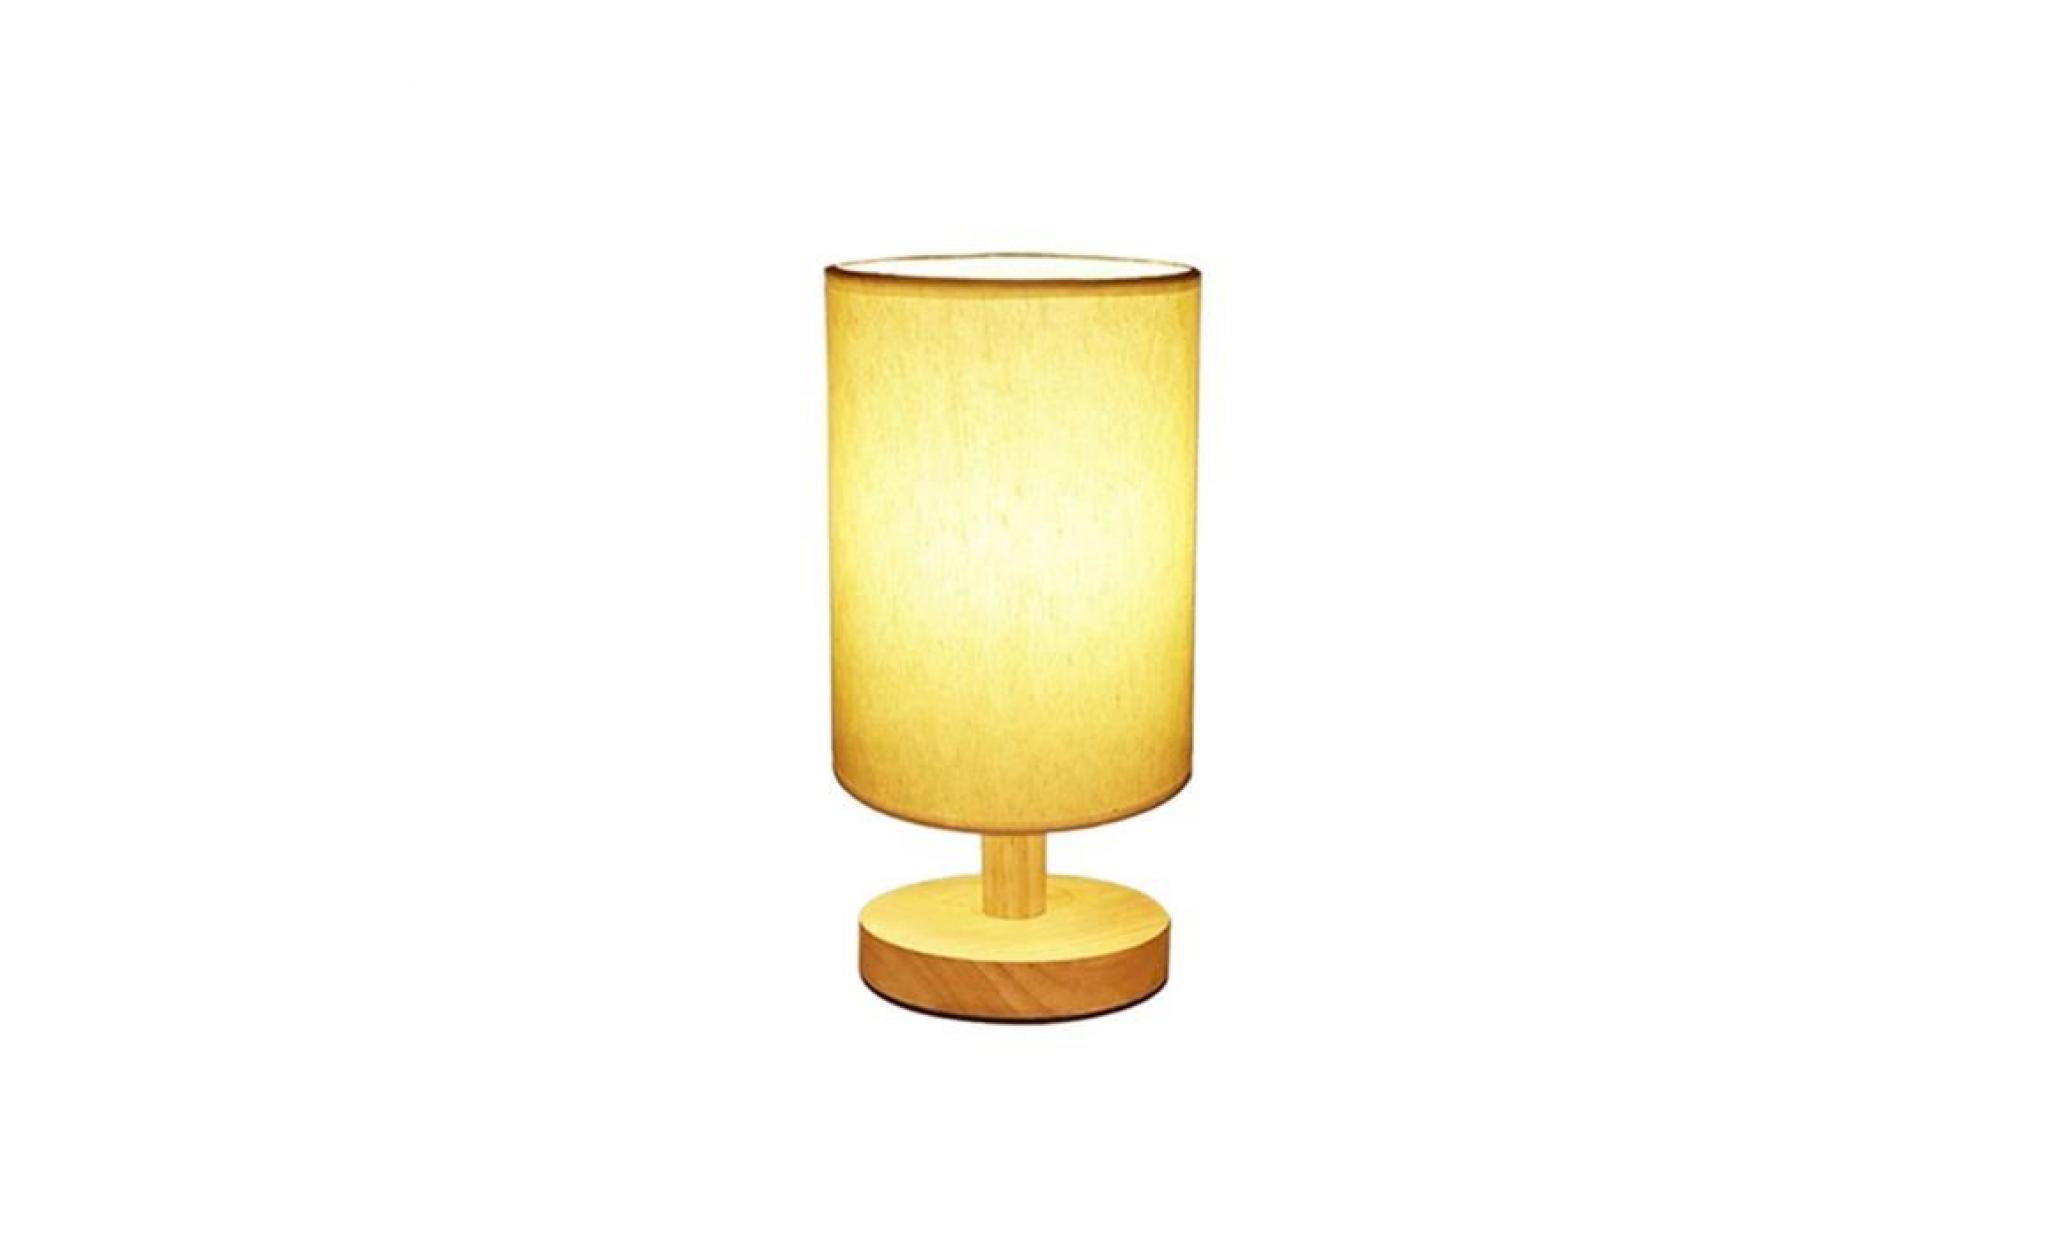 table de chevet lampe minimaliste en bois massif table lampe de chevet lampe de bureau simple lampe ronde bureau lampe de chevet